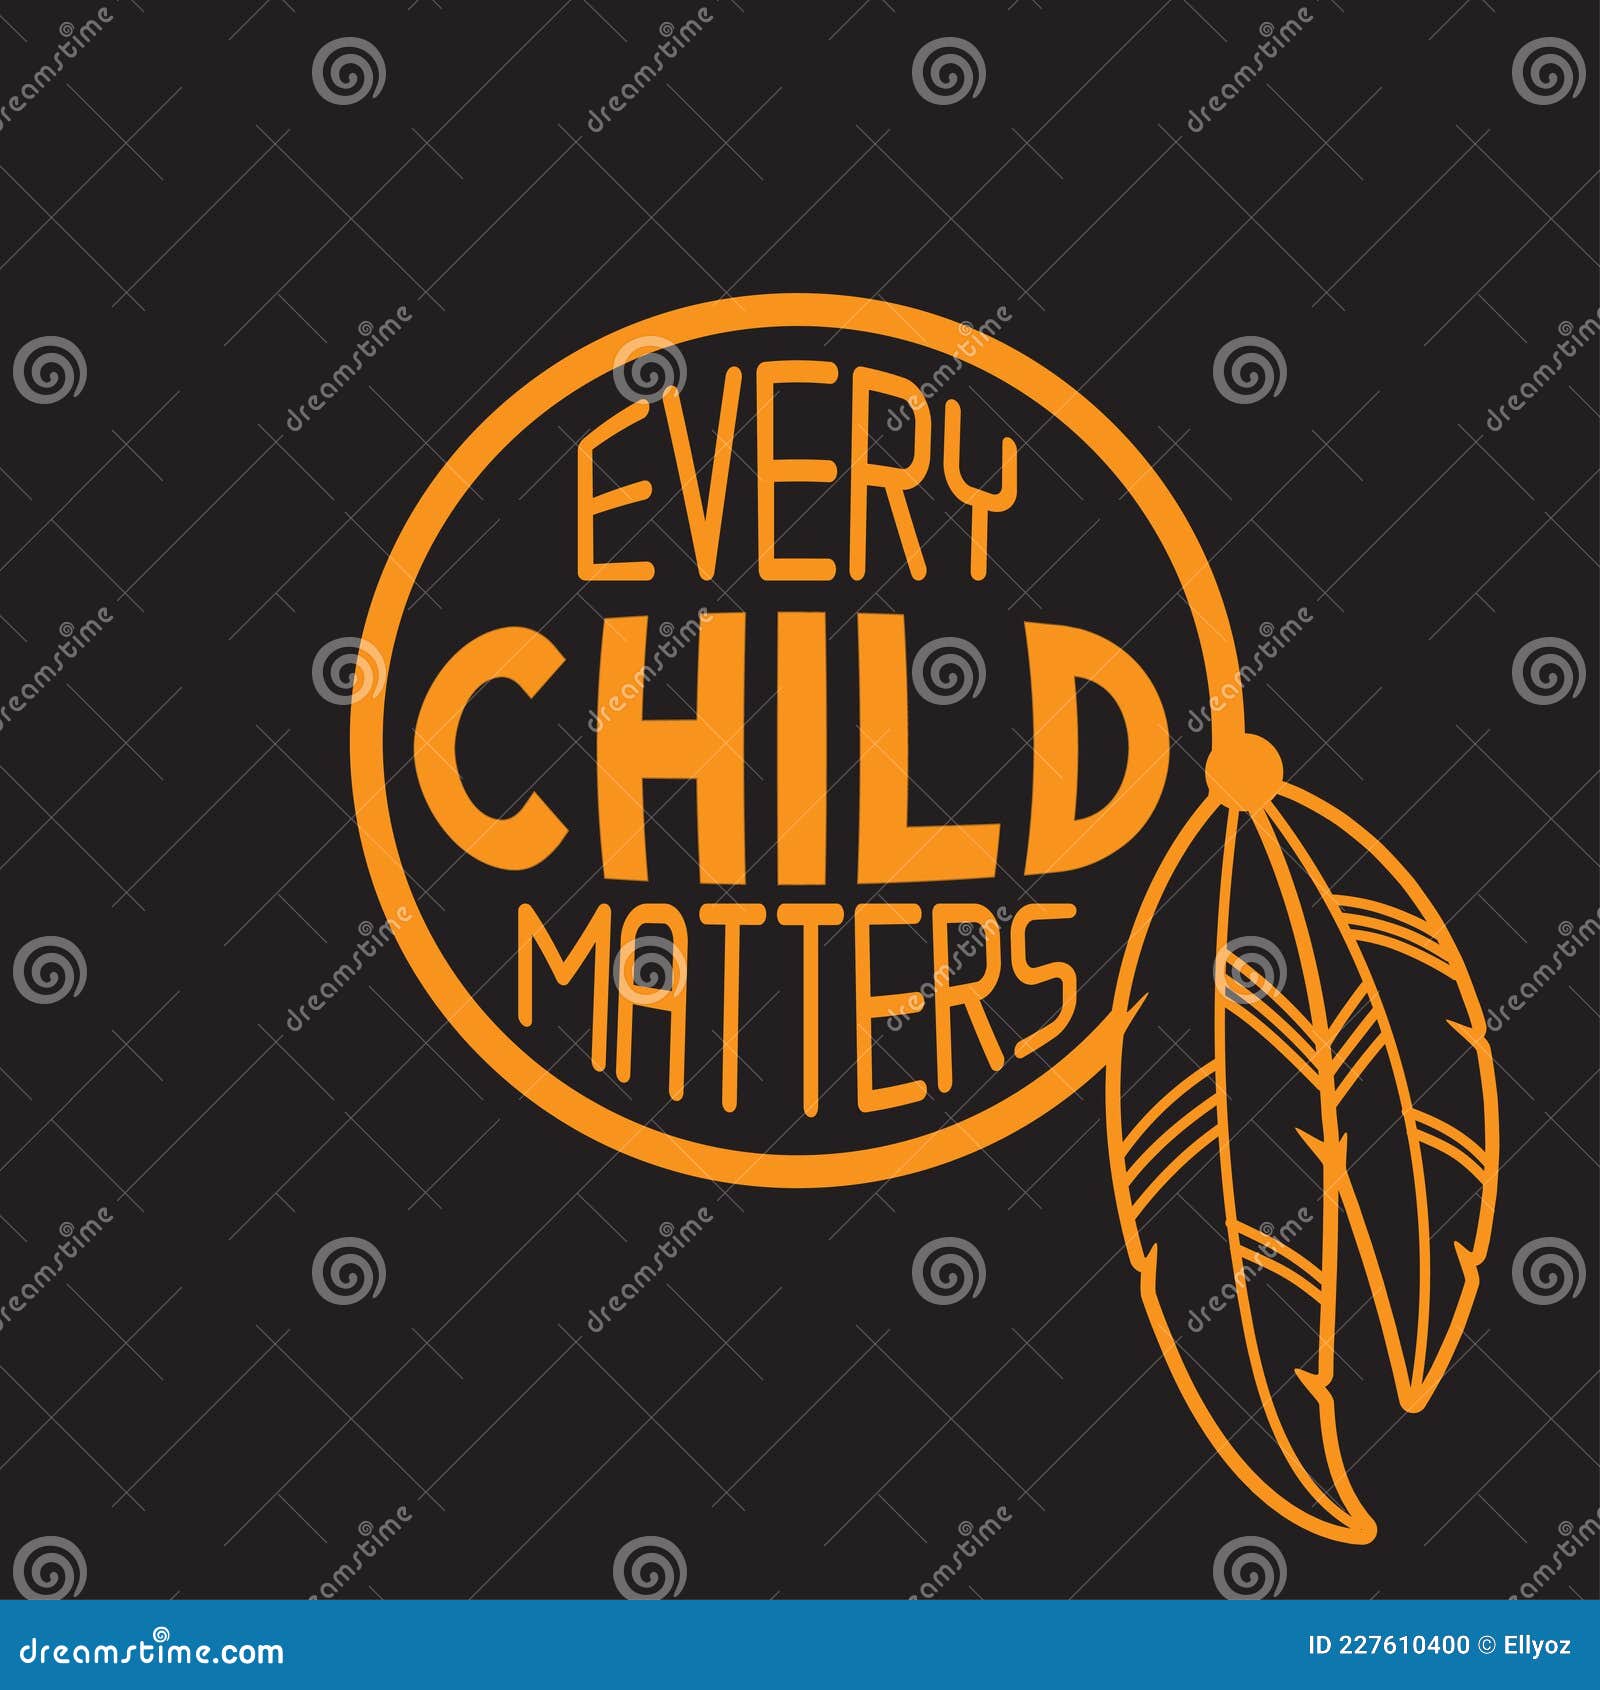 every child matters  